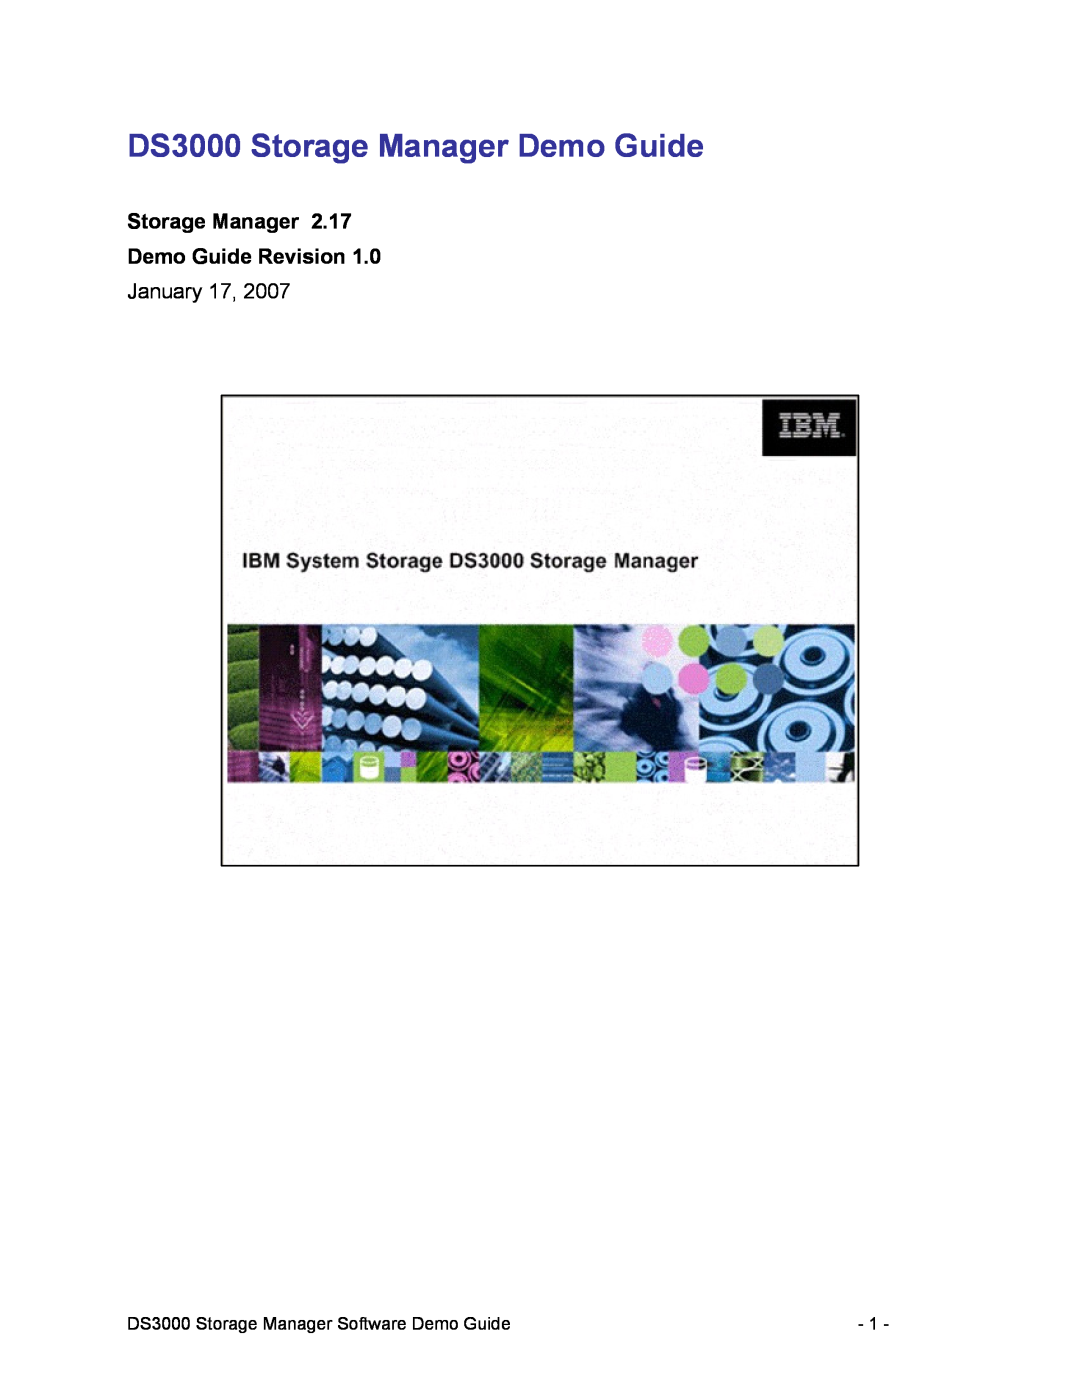 IBM DS3000 manual IBM System Storage Digital Media Storage Solution Installation Guide, e-mailcon.rice@lsi.com 